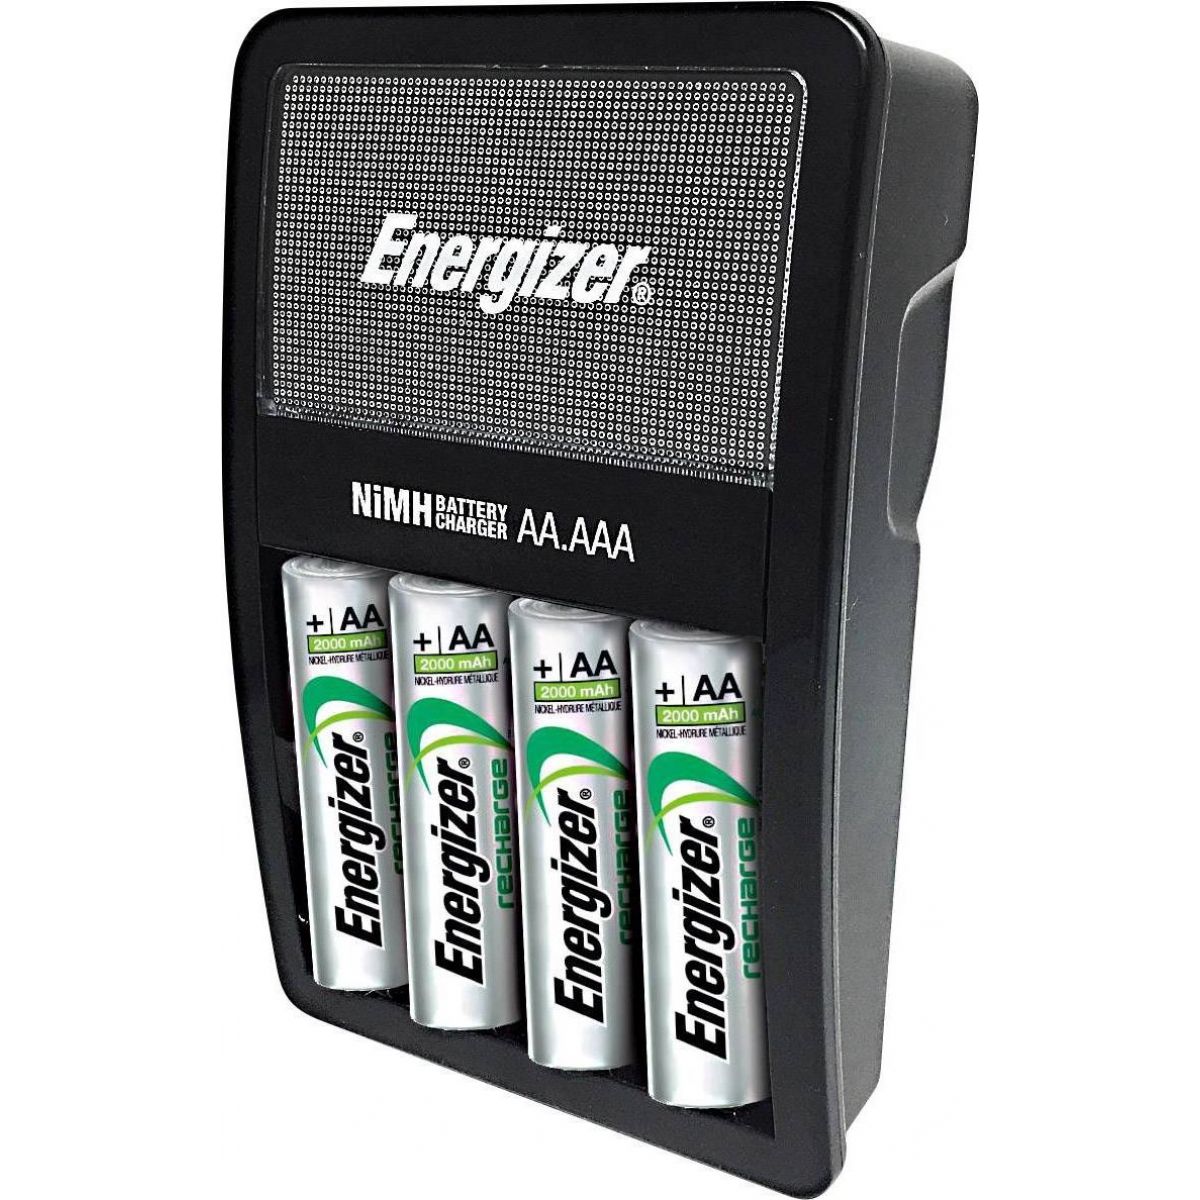 Energizer Nabíječka MAXI charger + 4x AA 2000mAh NiMH